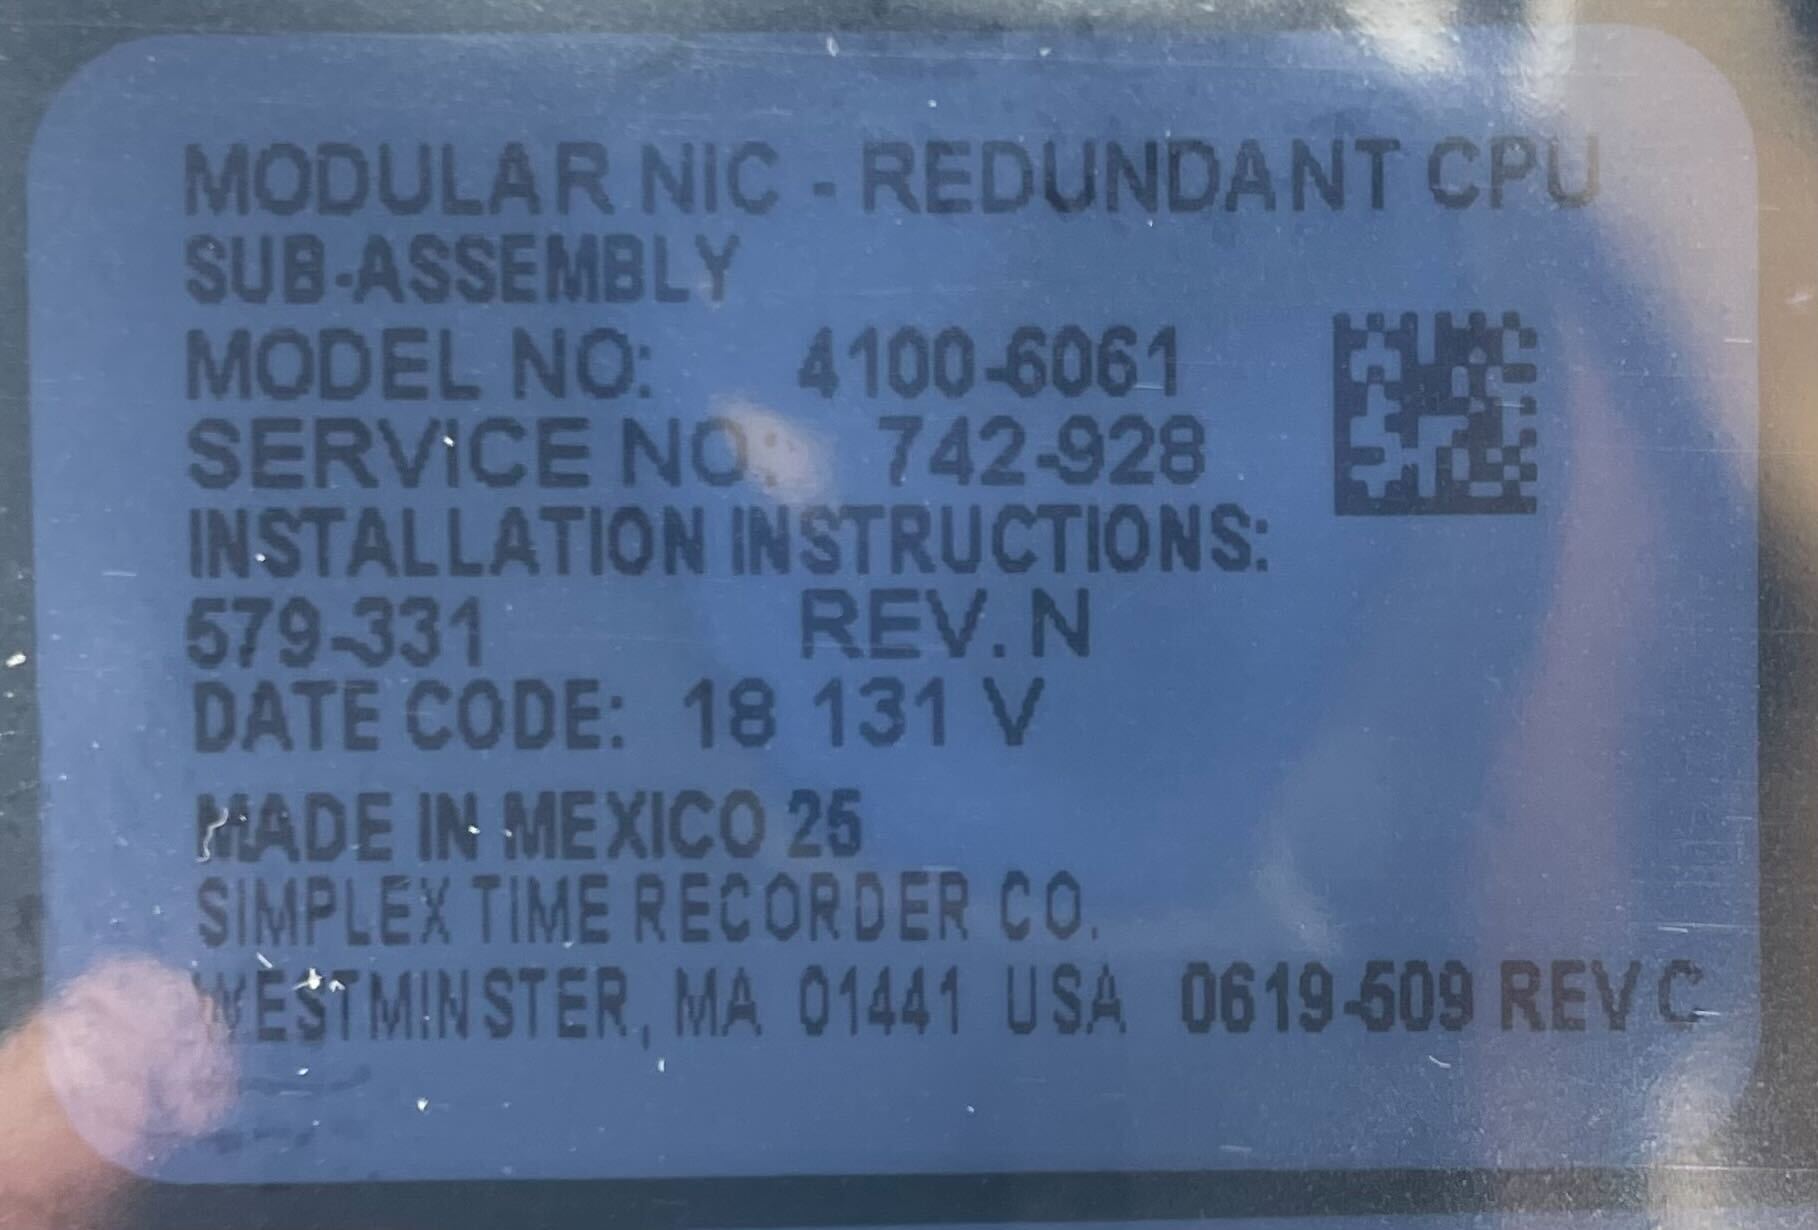 Simplex 4100-6061 Redundant Modular Nic - The Fire Alarm Supplier